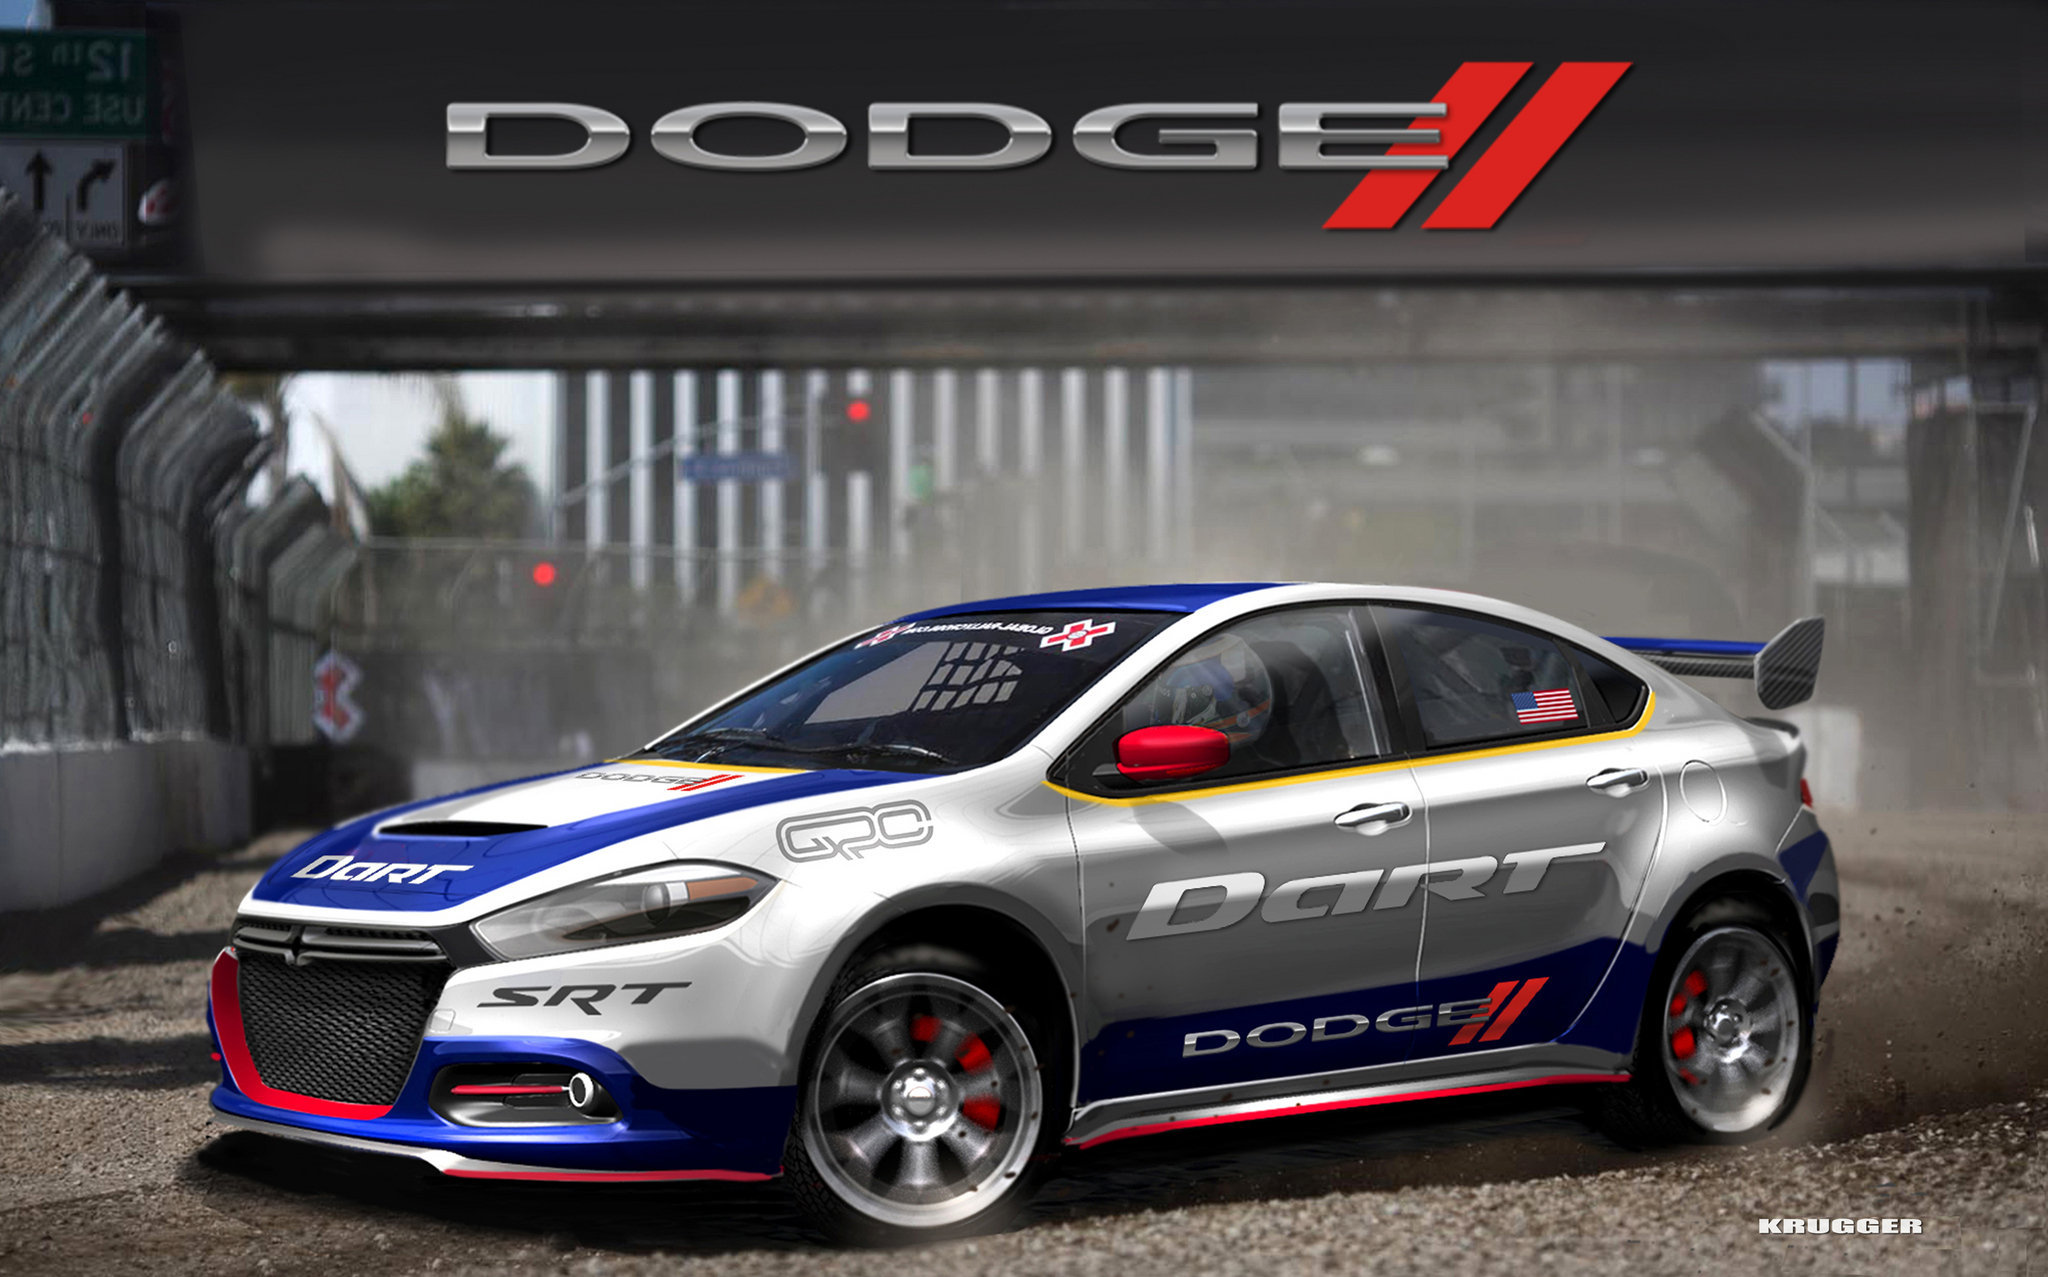 2013-dodge-dart-rallycrossjpg-9d097dce60e26e19.jpg